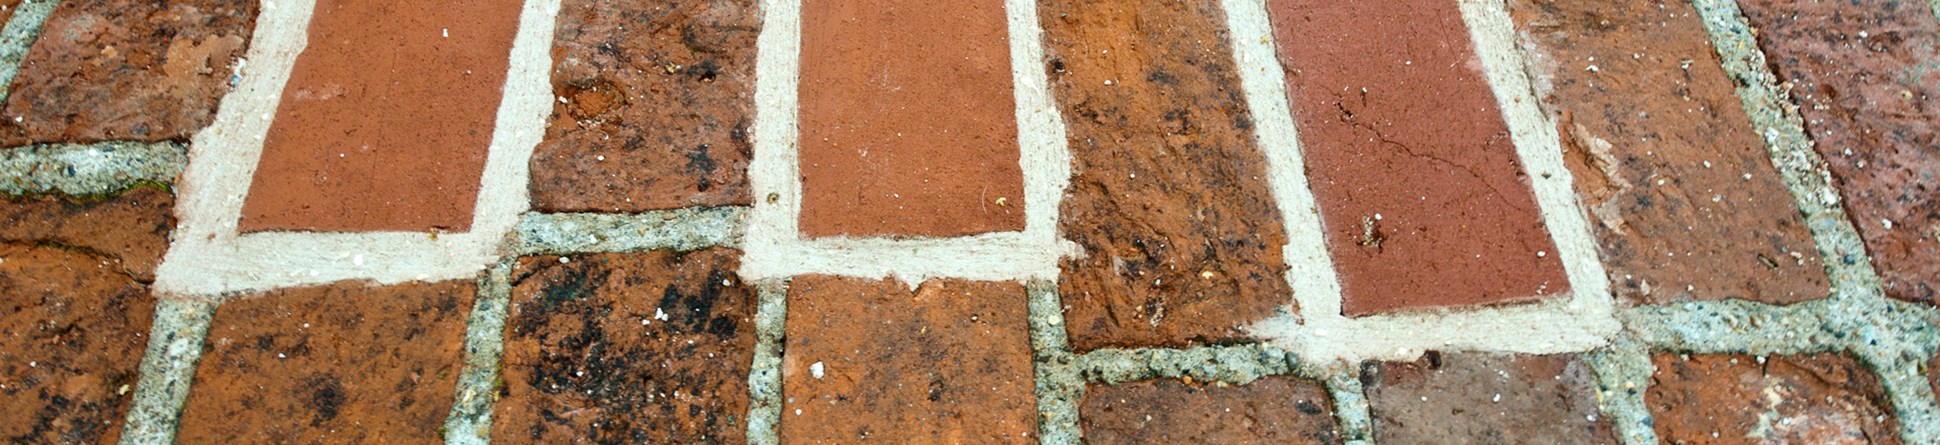 Close-up image of bricks.